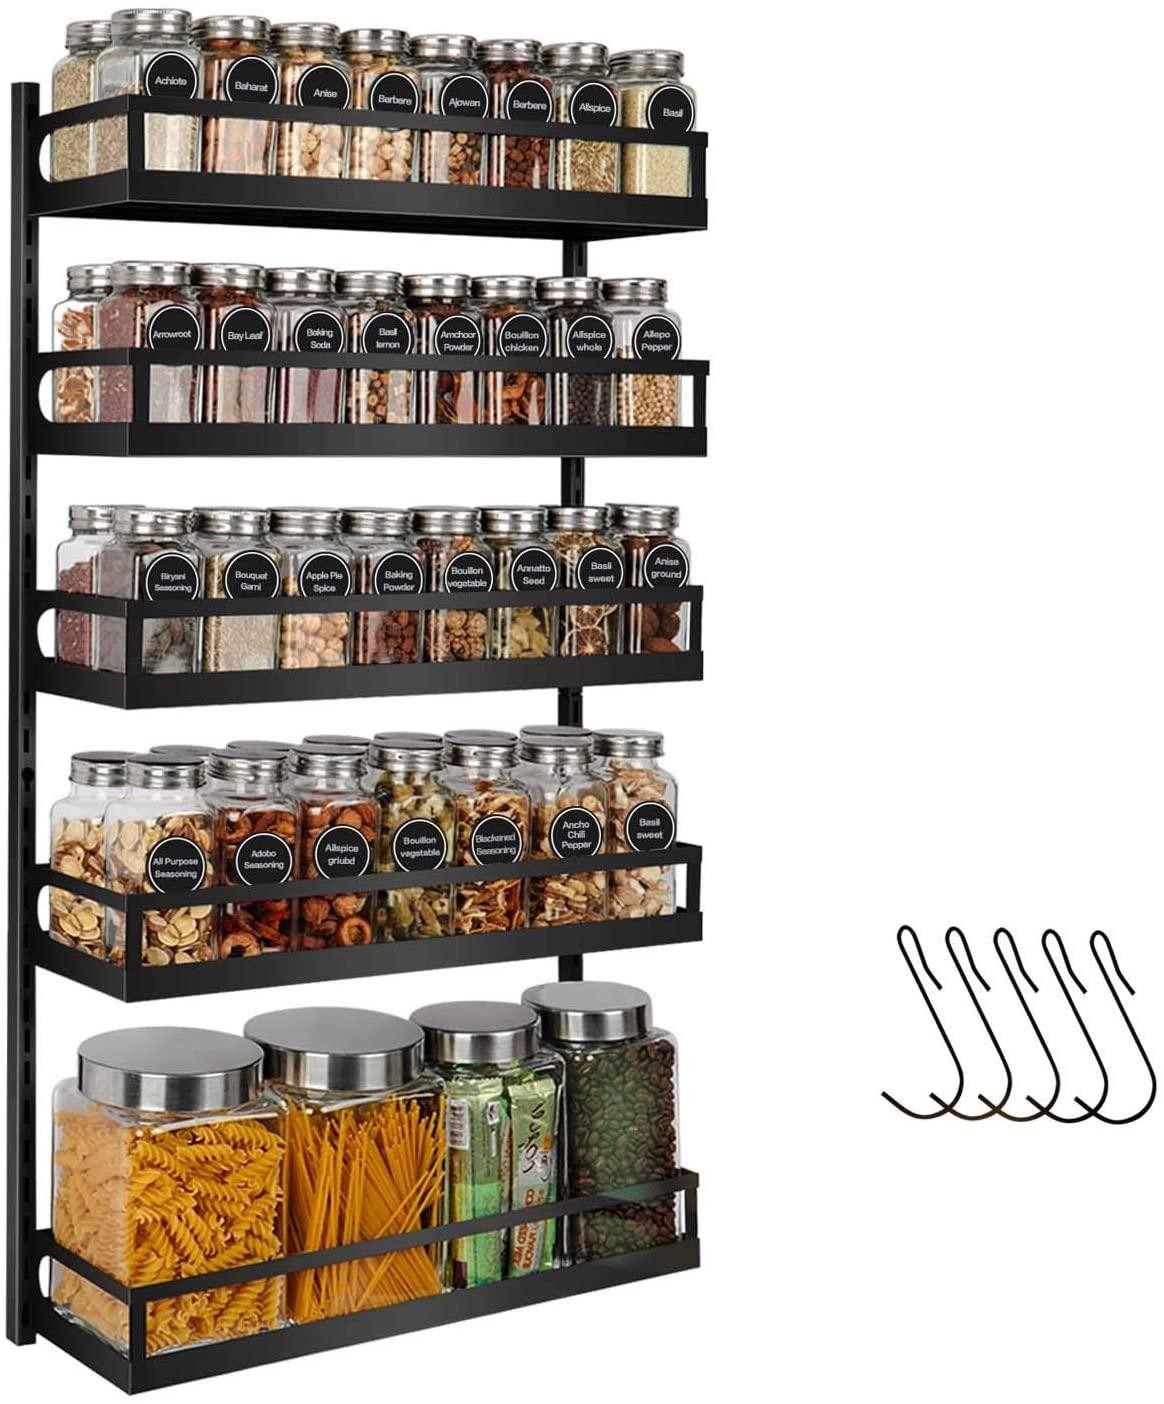 Wall mount spice rack organizer 5 tier height adjustable